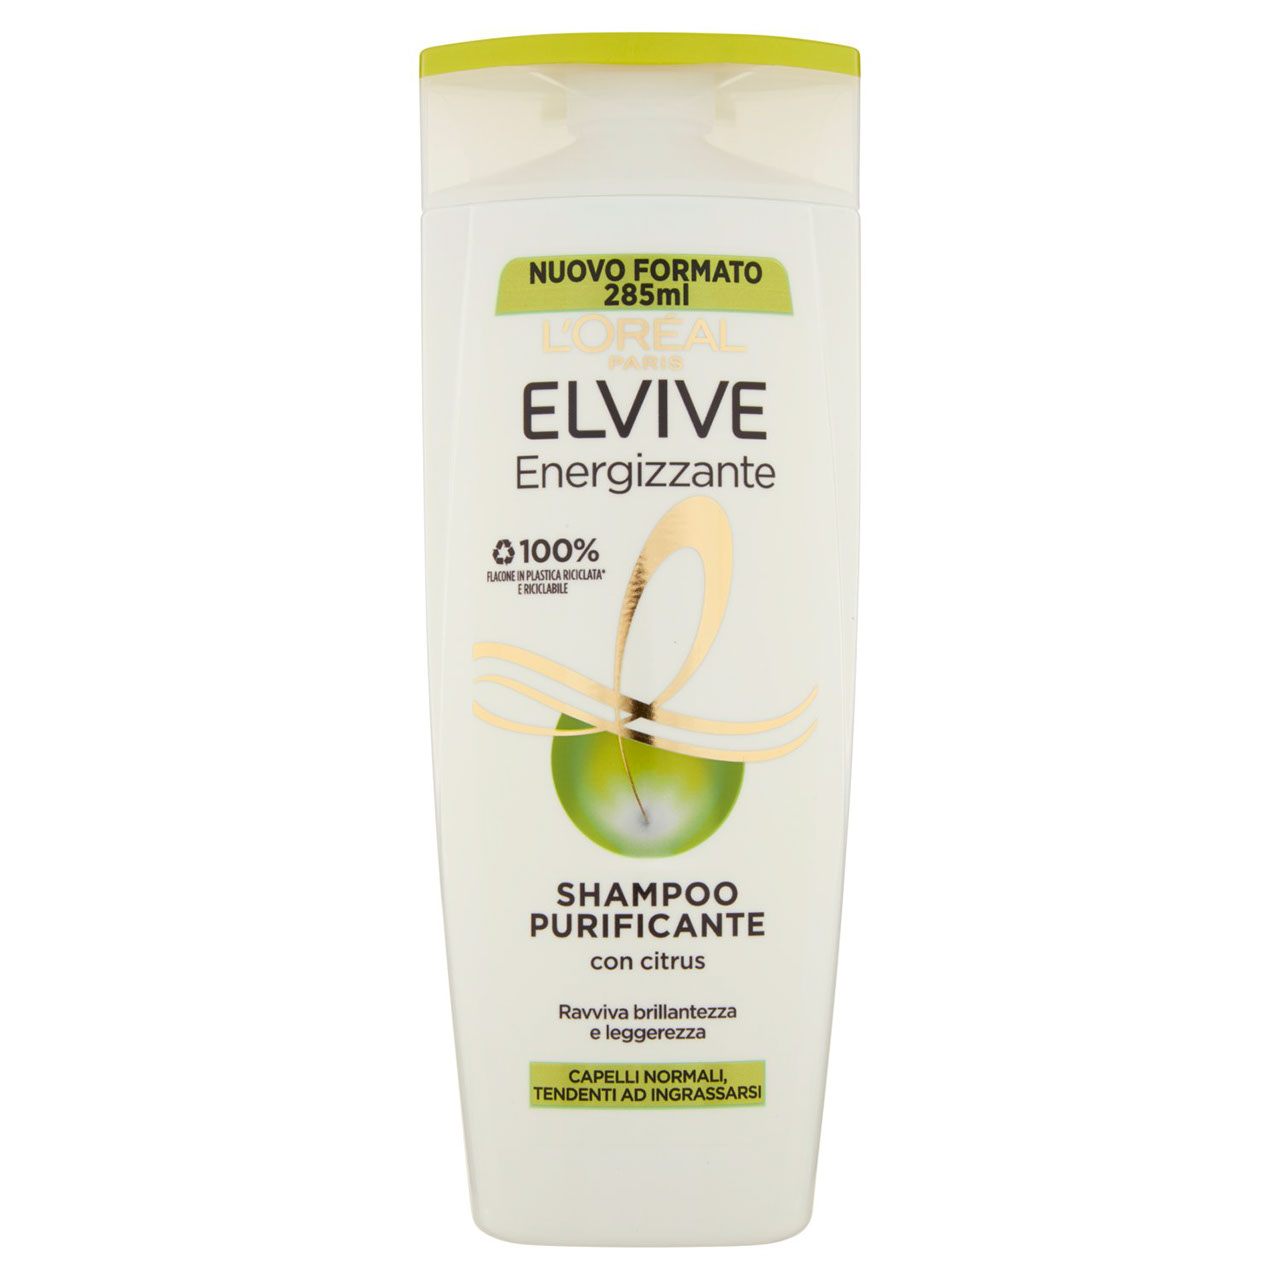 Shampoo Elvive Energizzante in vendita online